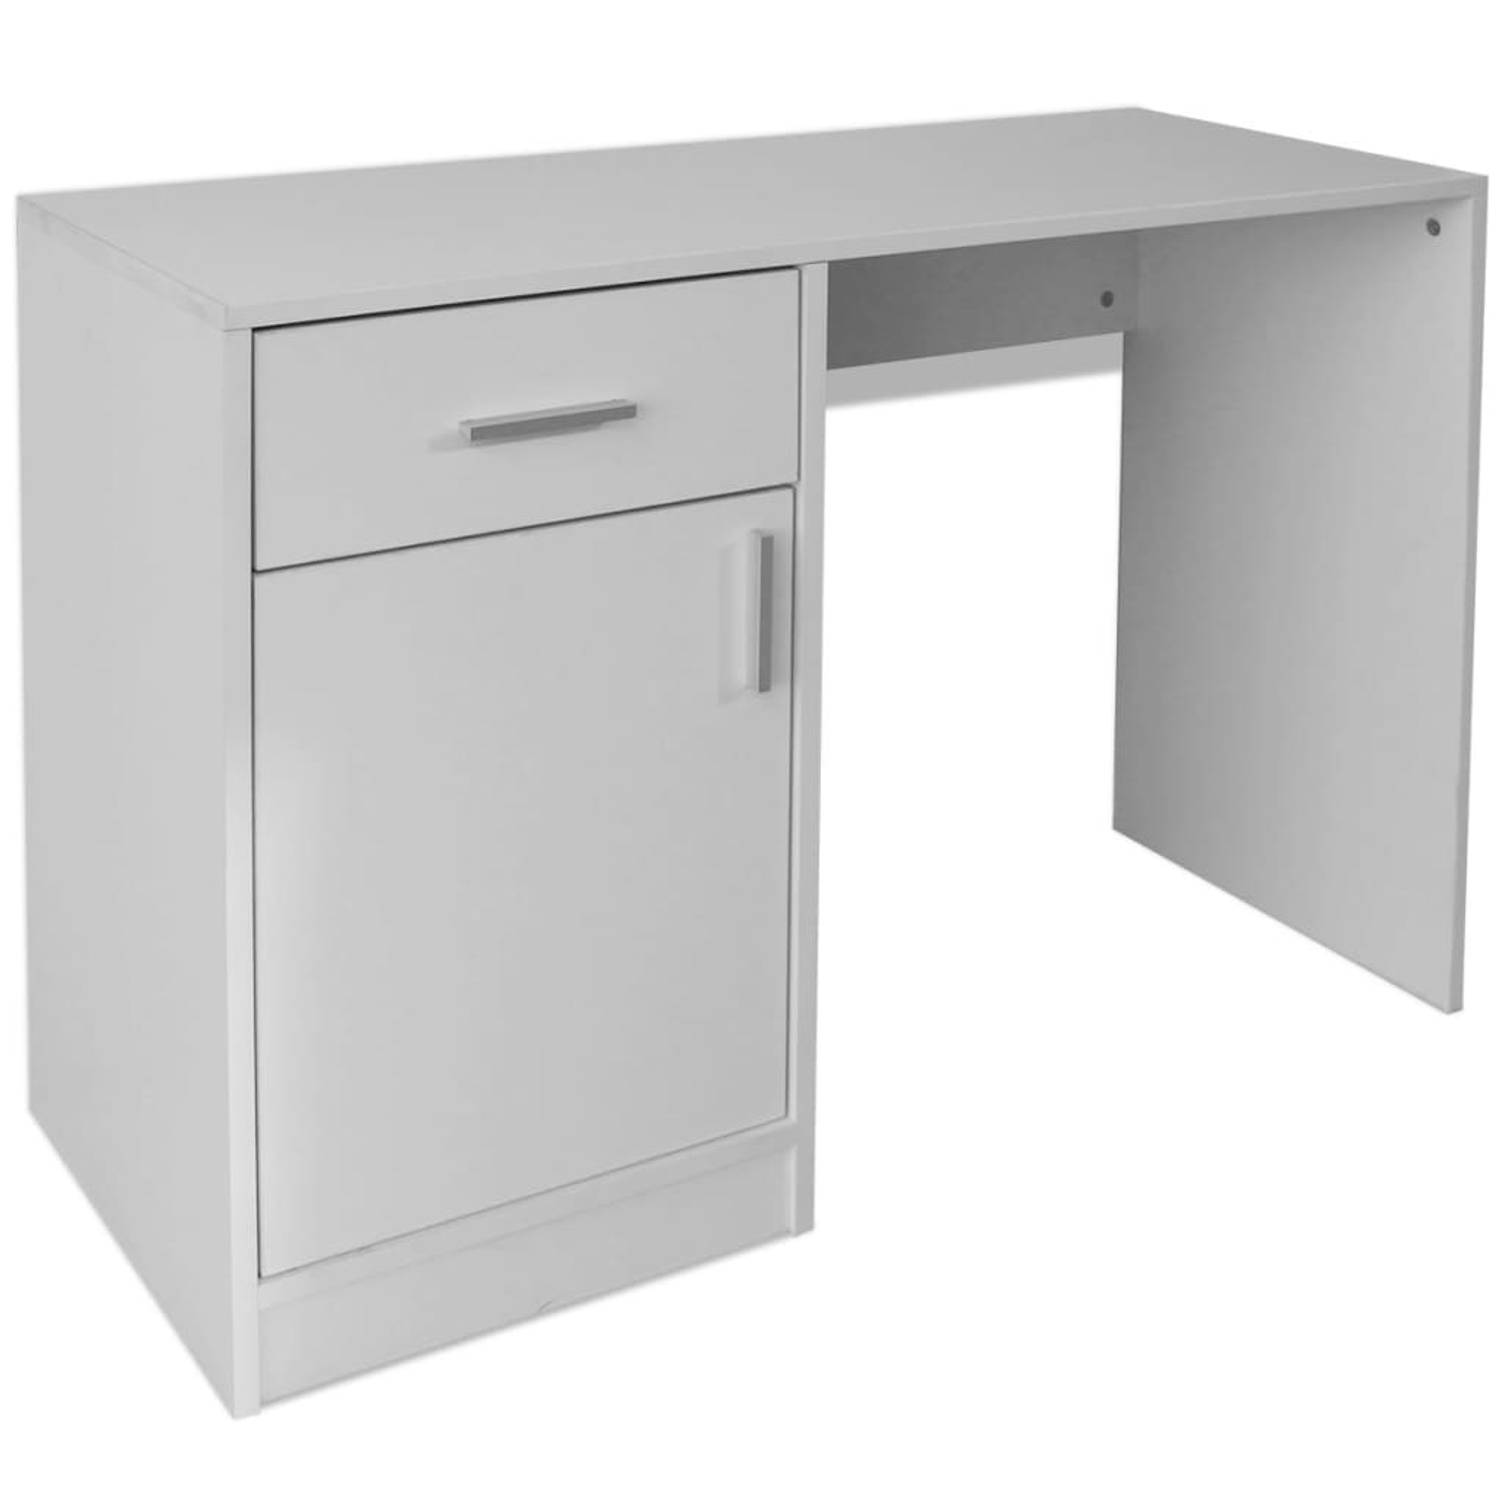 The Living Store Bureau White 100x40x73cm High-Quality Wood MDF 1 Drawer 1 Cabinet Aluminum Handles